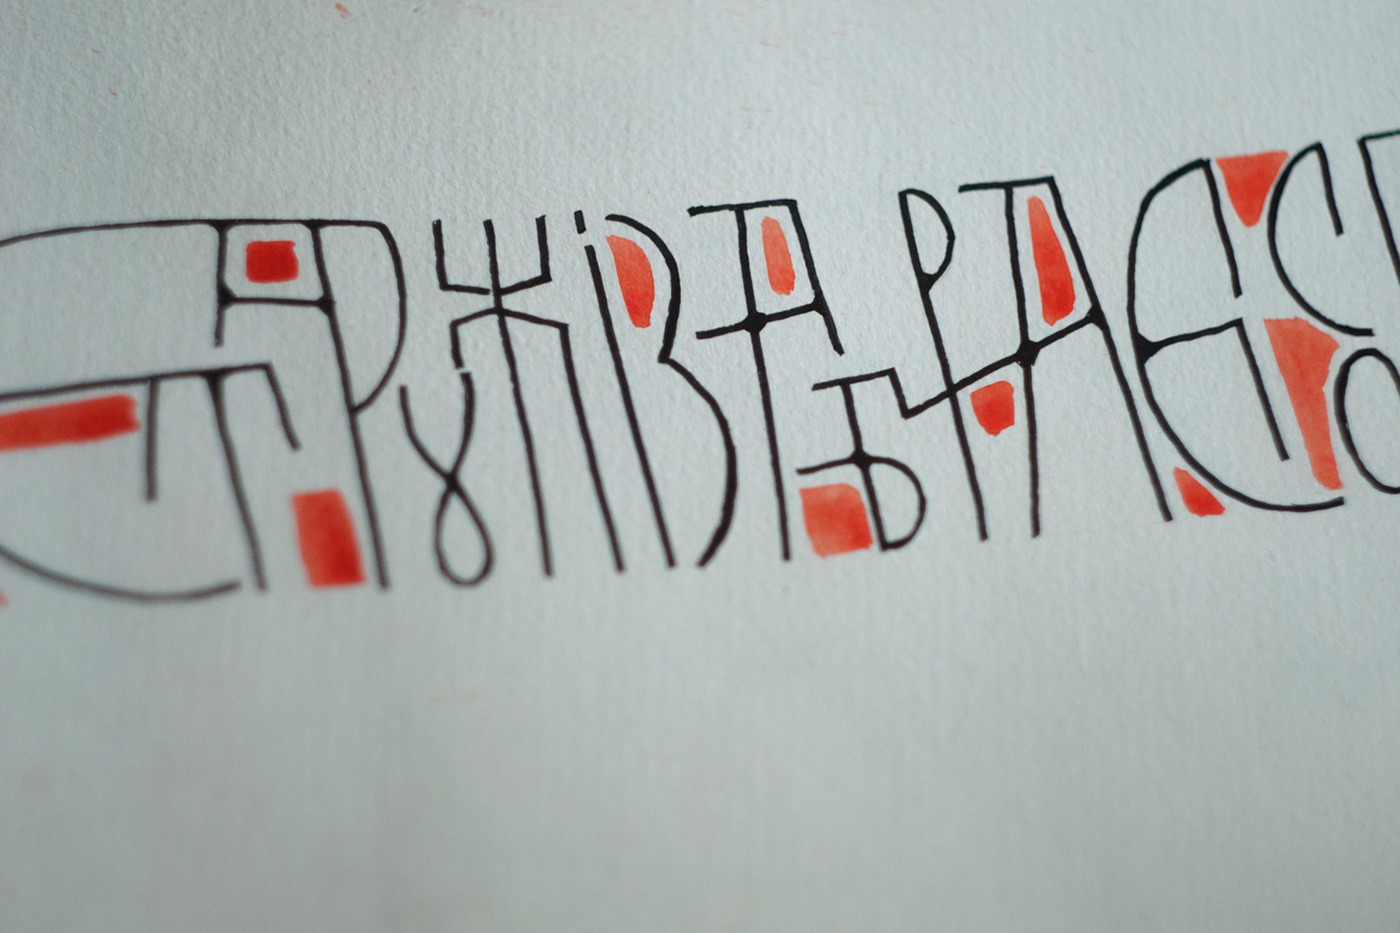 vikavita thedesignofwords thedesignofwords_vikavita typo design moleskine sketchbook ukraine Cyrillic letters lettering